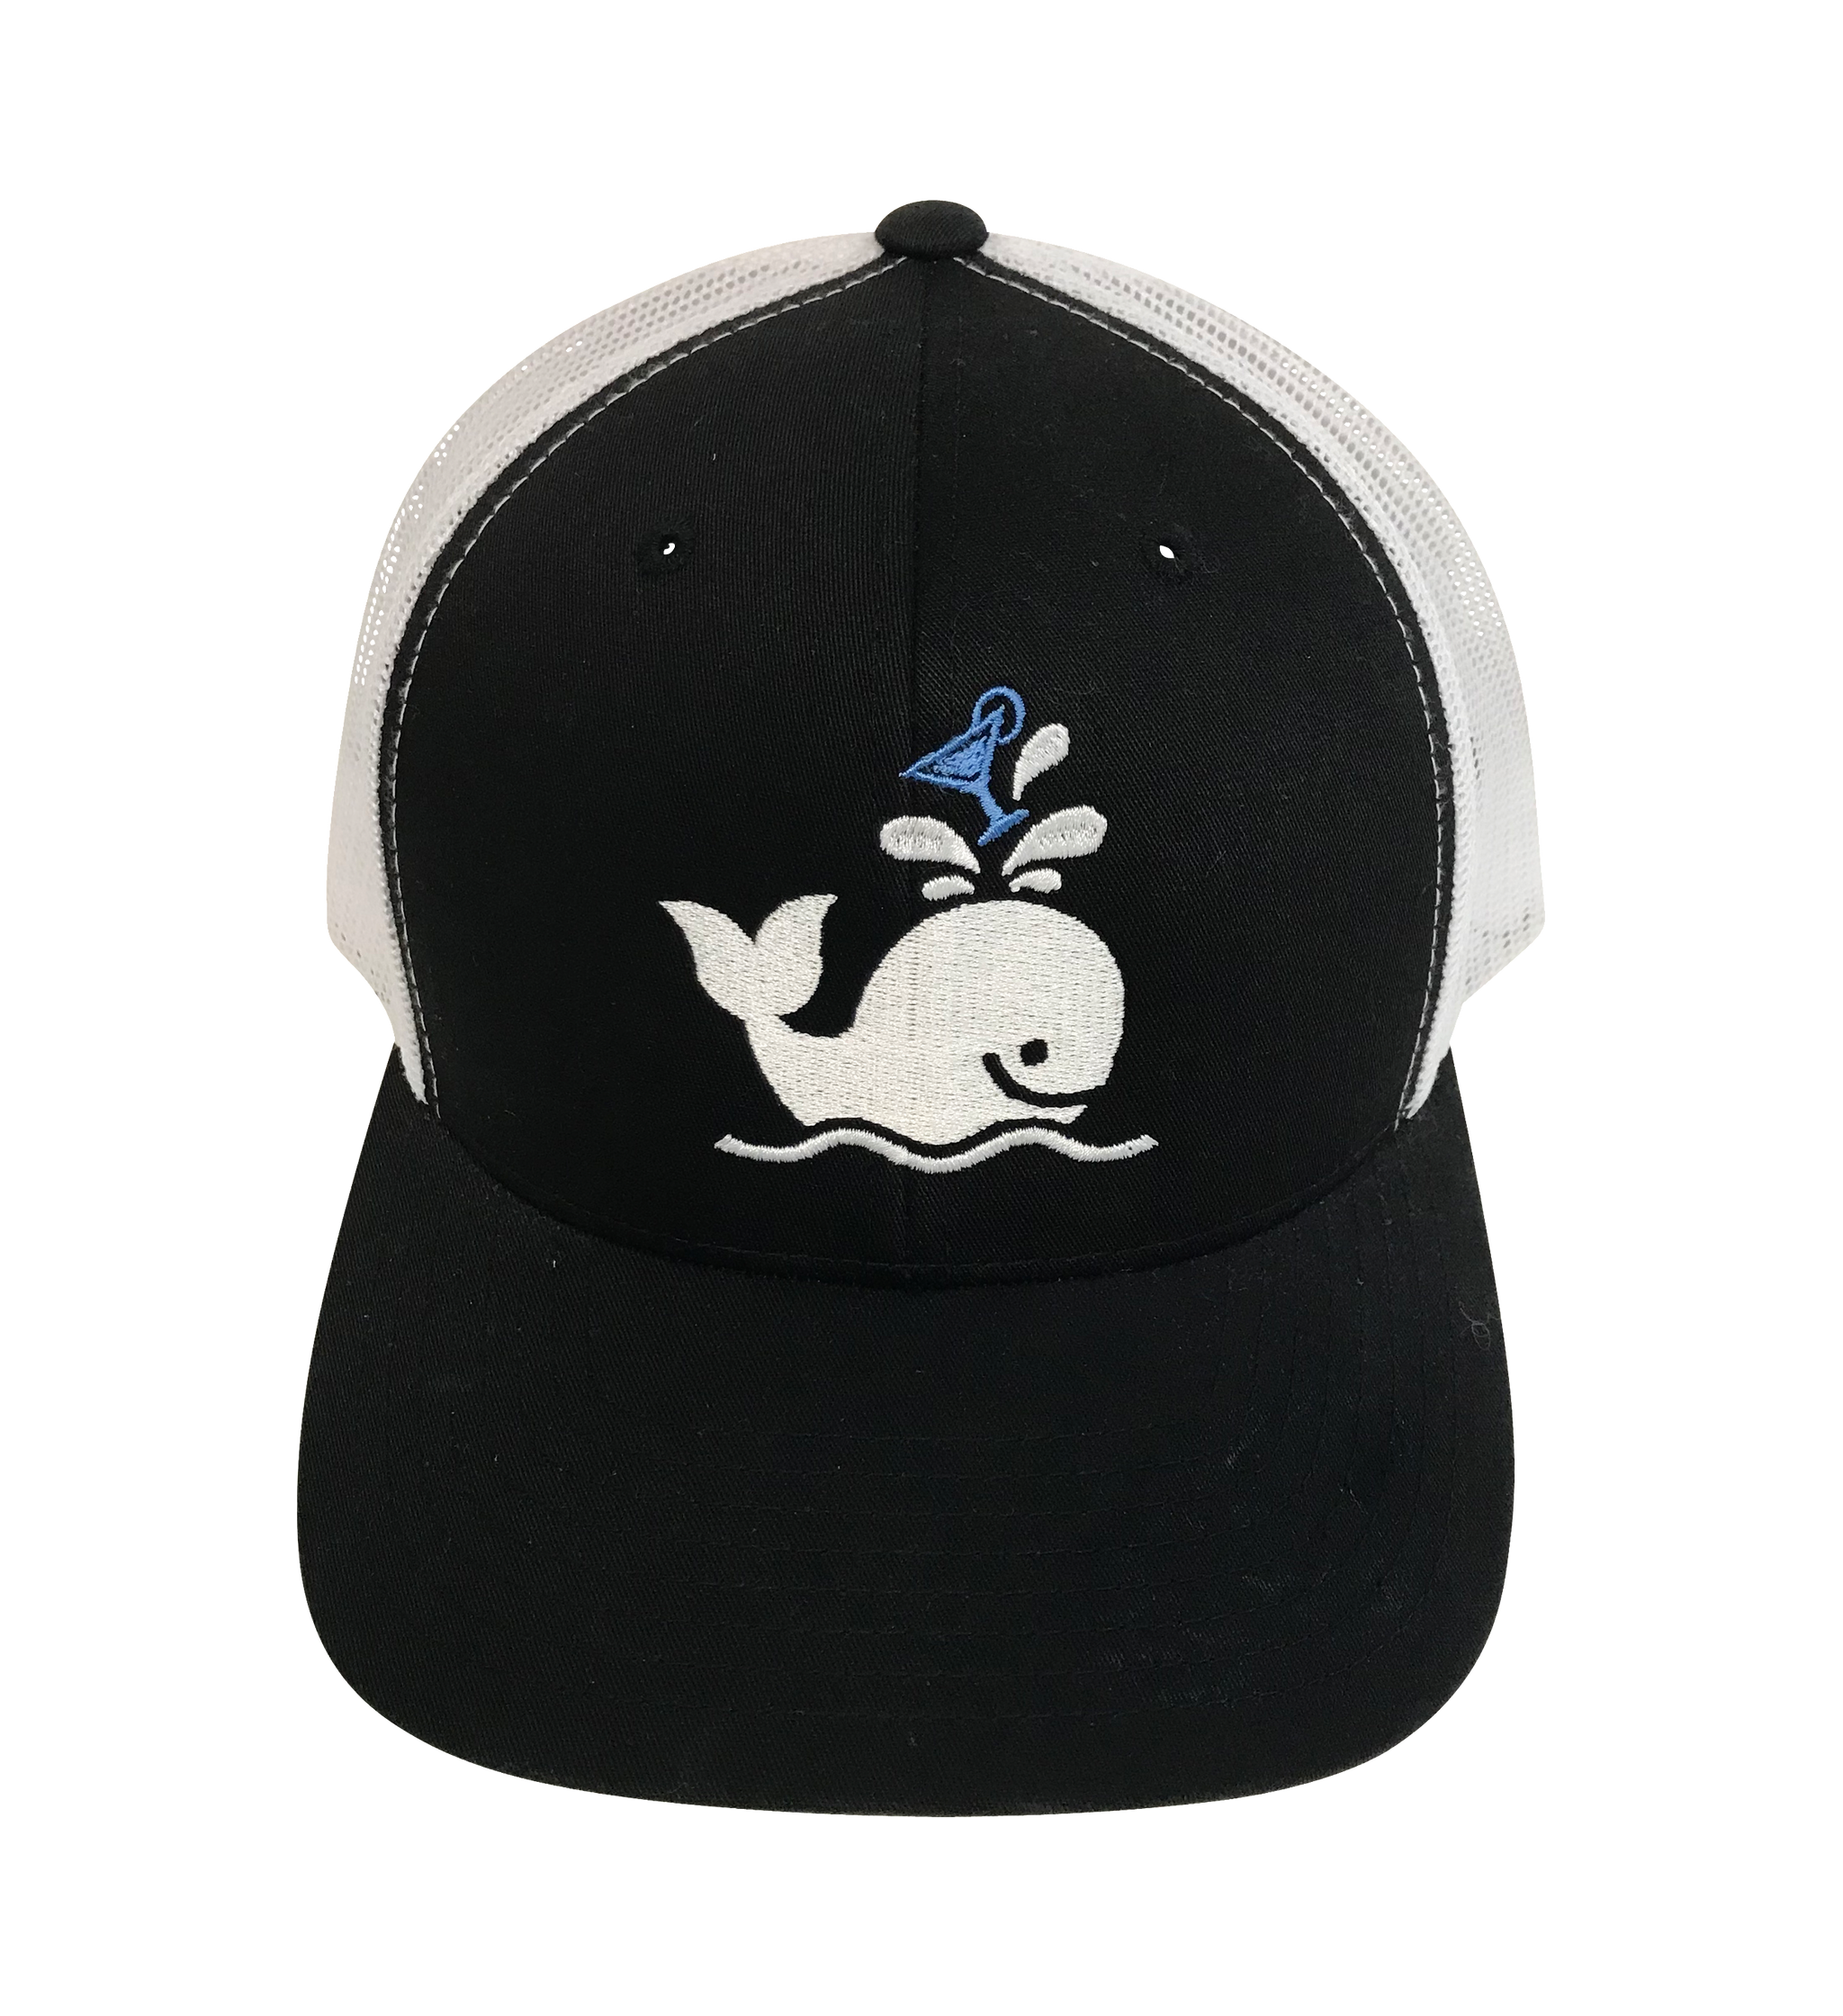 Island Smilin' Spout the Martini Whale Embroidered Trucker Hat - Black/White